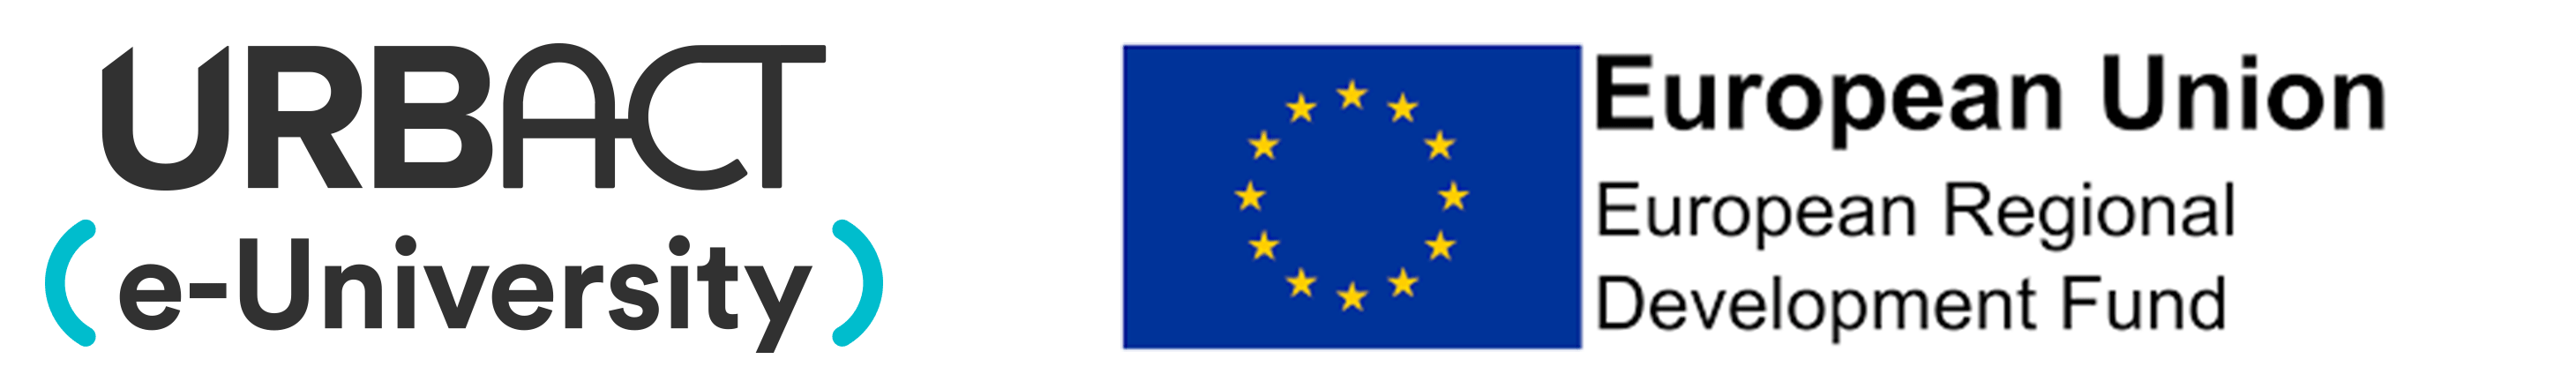 https://eu-admin.eventscloud.com/file_uploads/261c72dee9fc0d21c11c7d4a55e9b9bc_animated_logo-02.gif